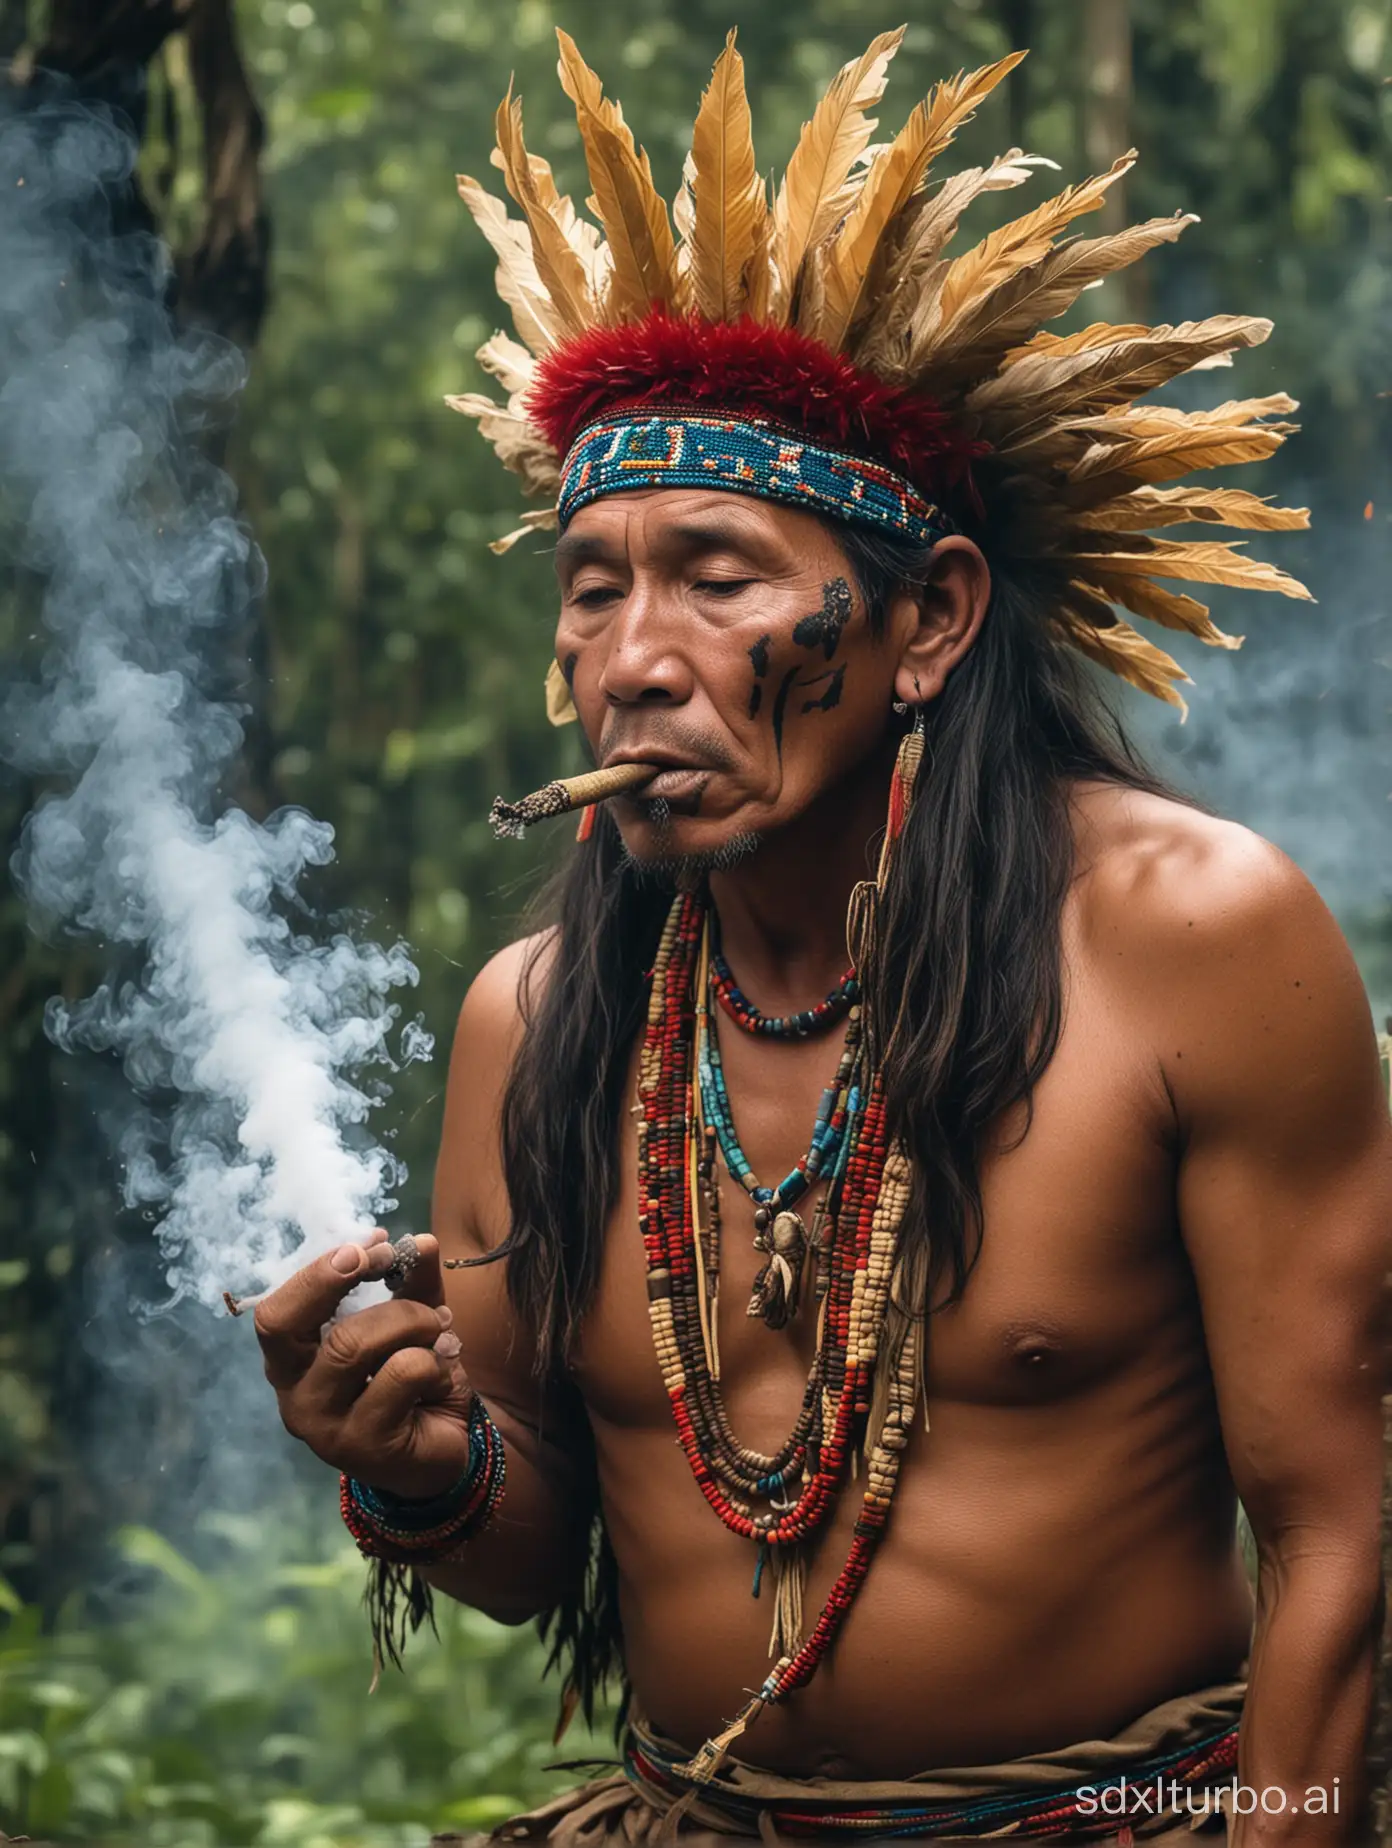 a Peruvian shaman in the Amazon rainforest blows tobacco smoke